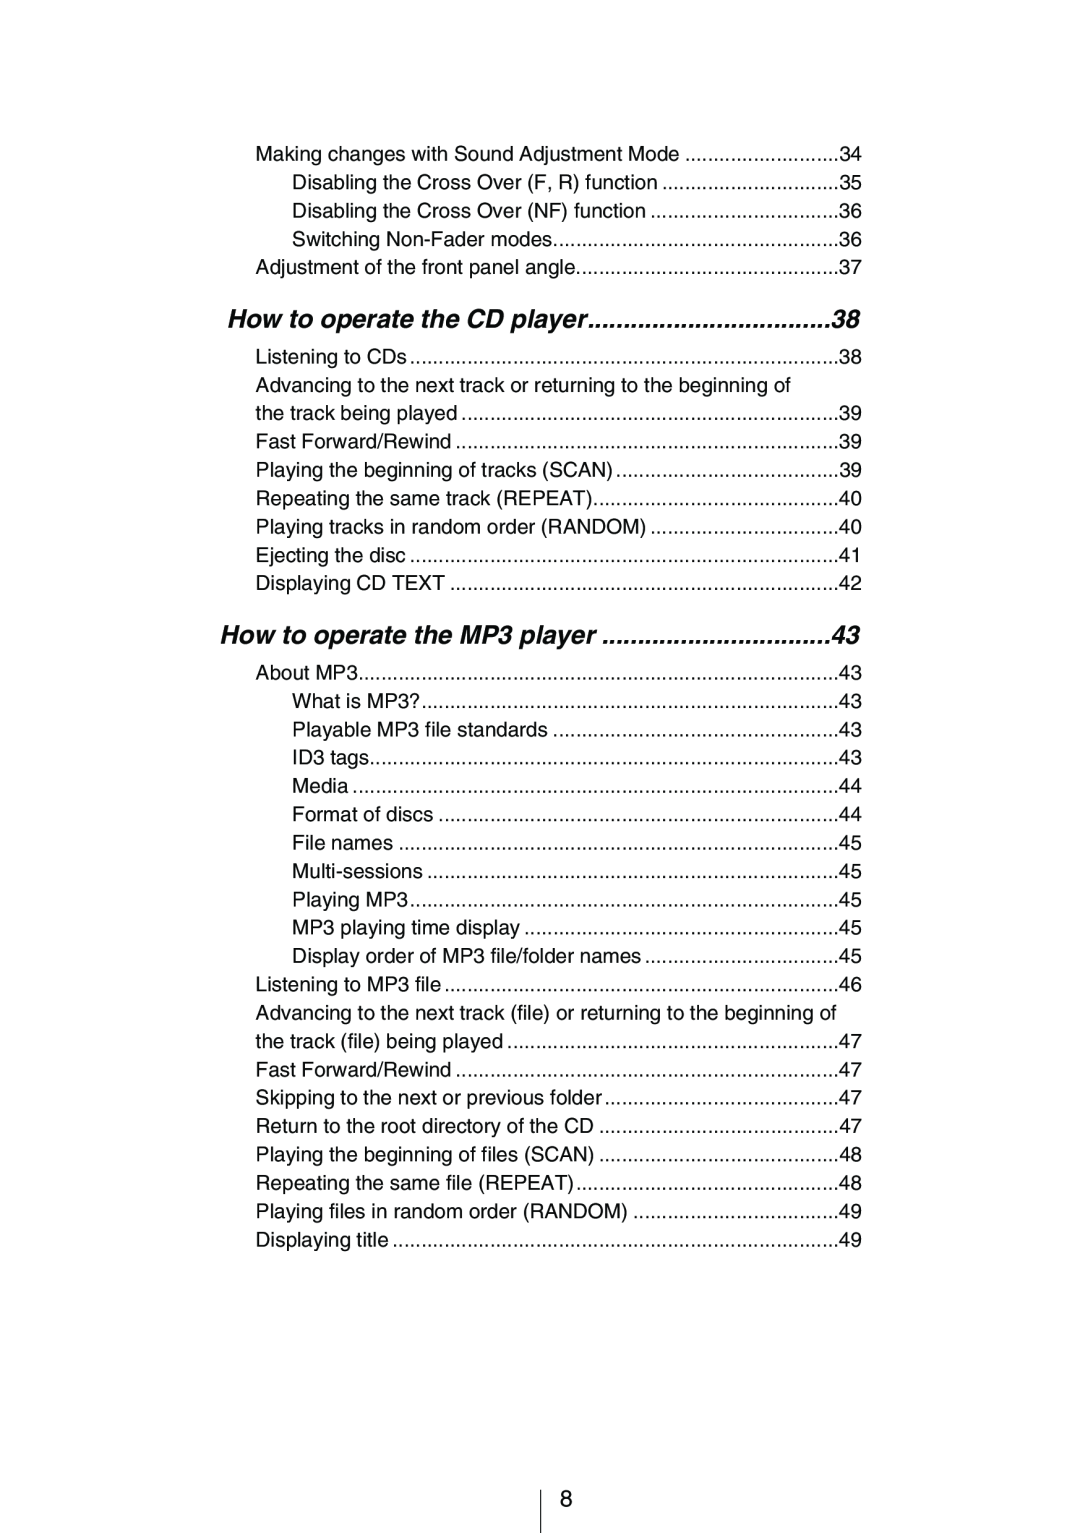 Eclipse - Fujitsu Ten CD3434 owner manual How to operate the CD player, How to operate the MP3 player 